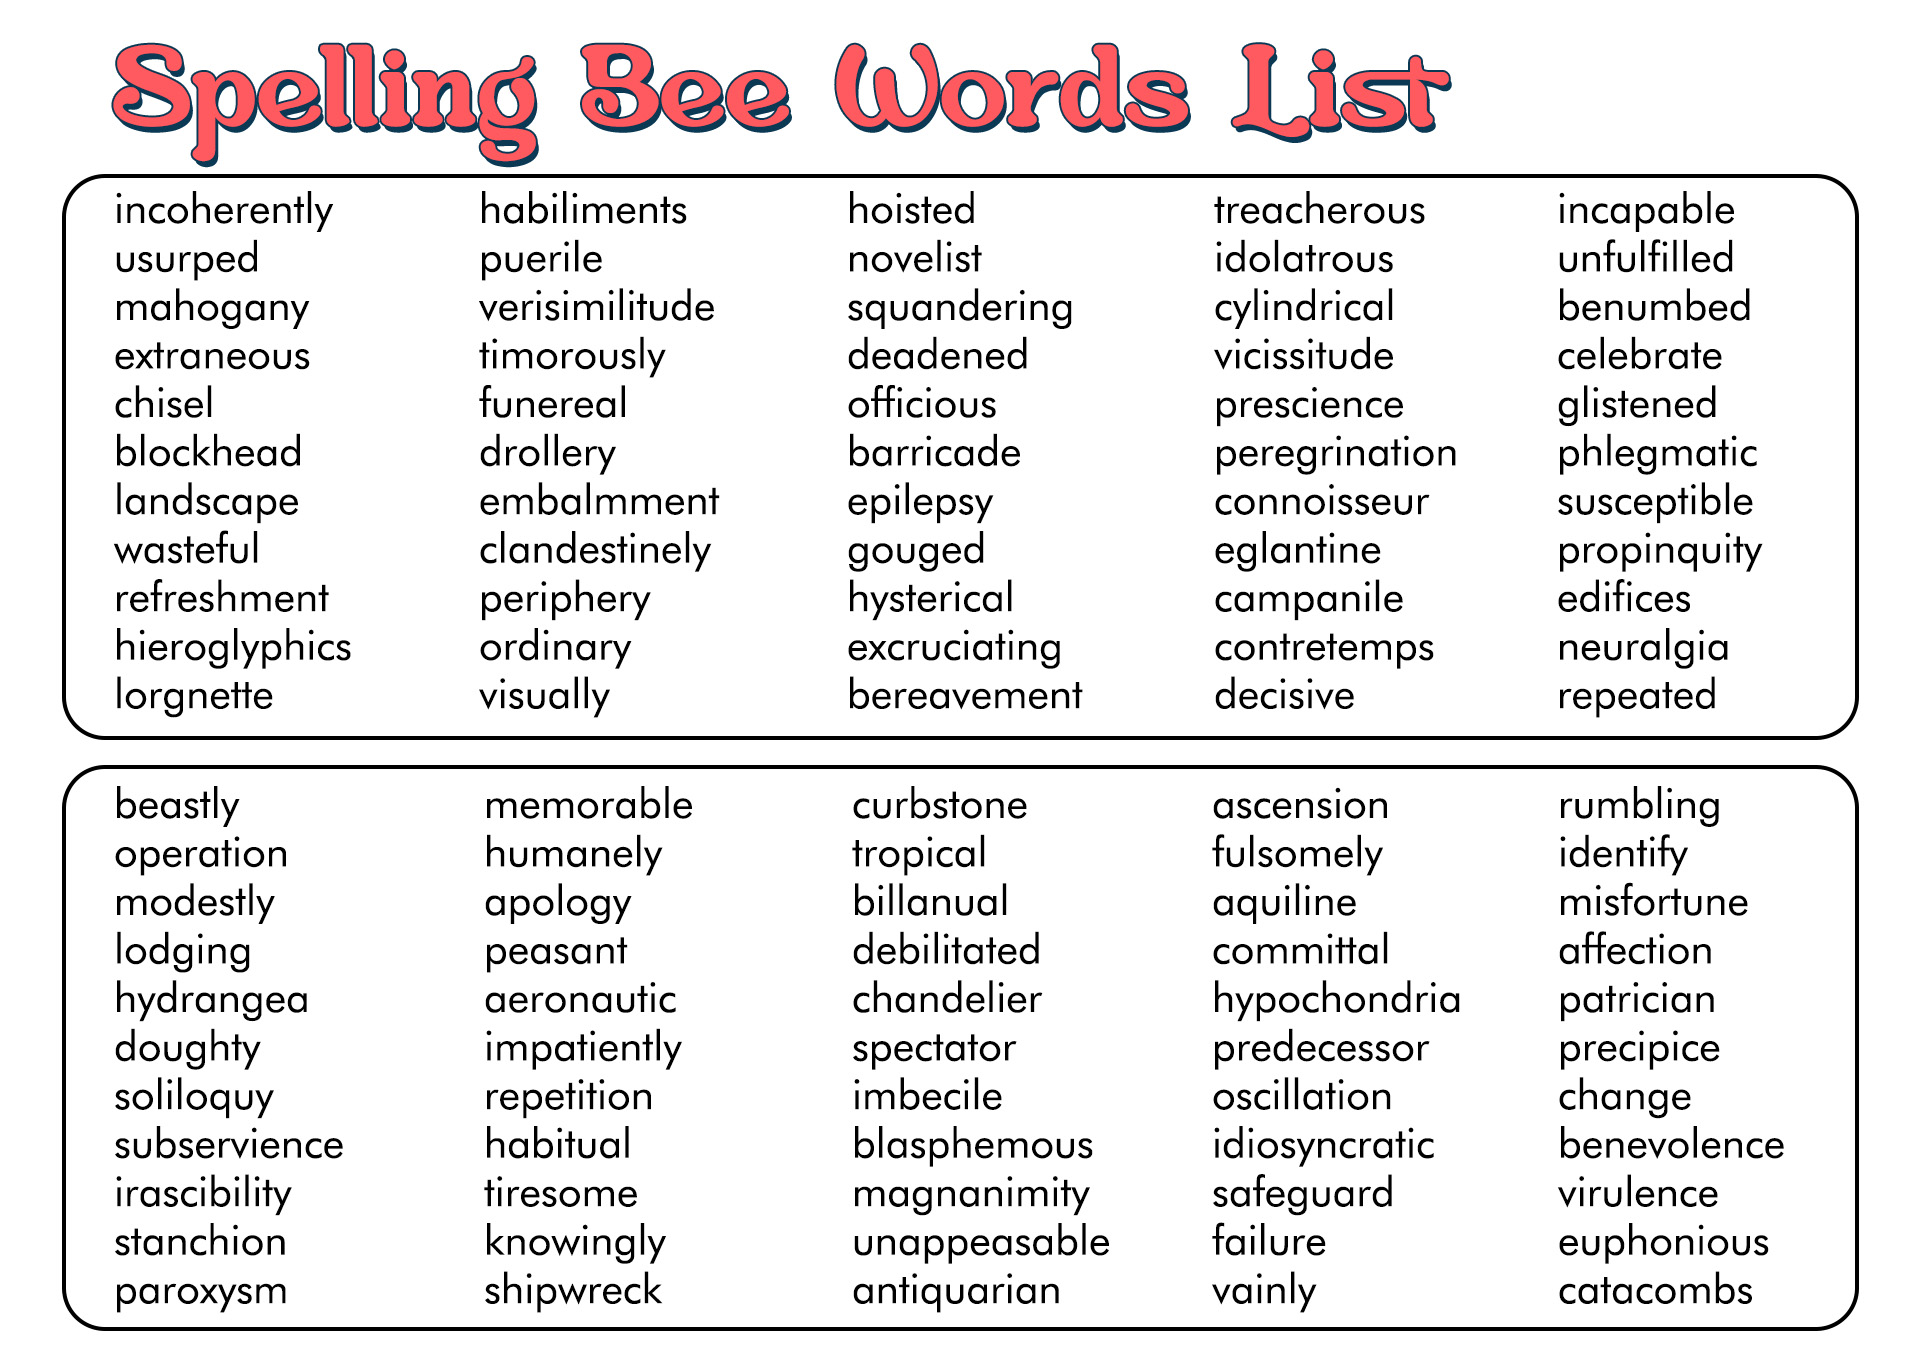 6th Grade Spelling Bee Words List Image